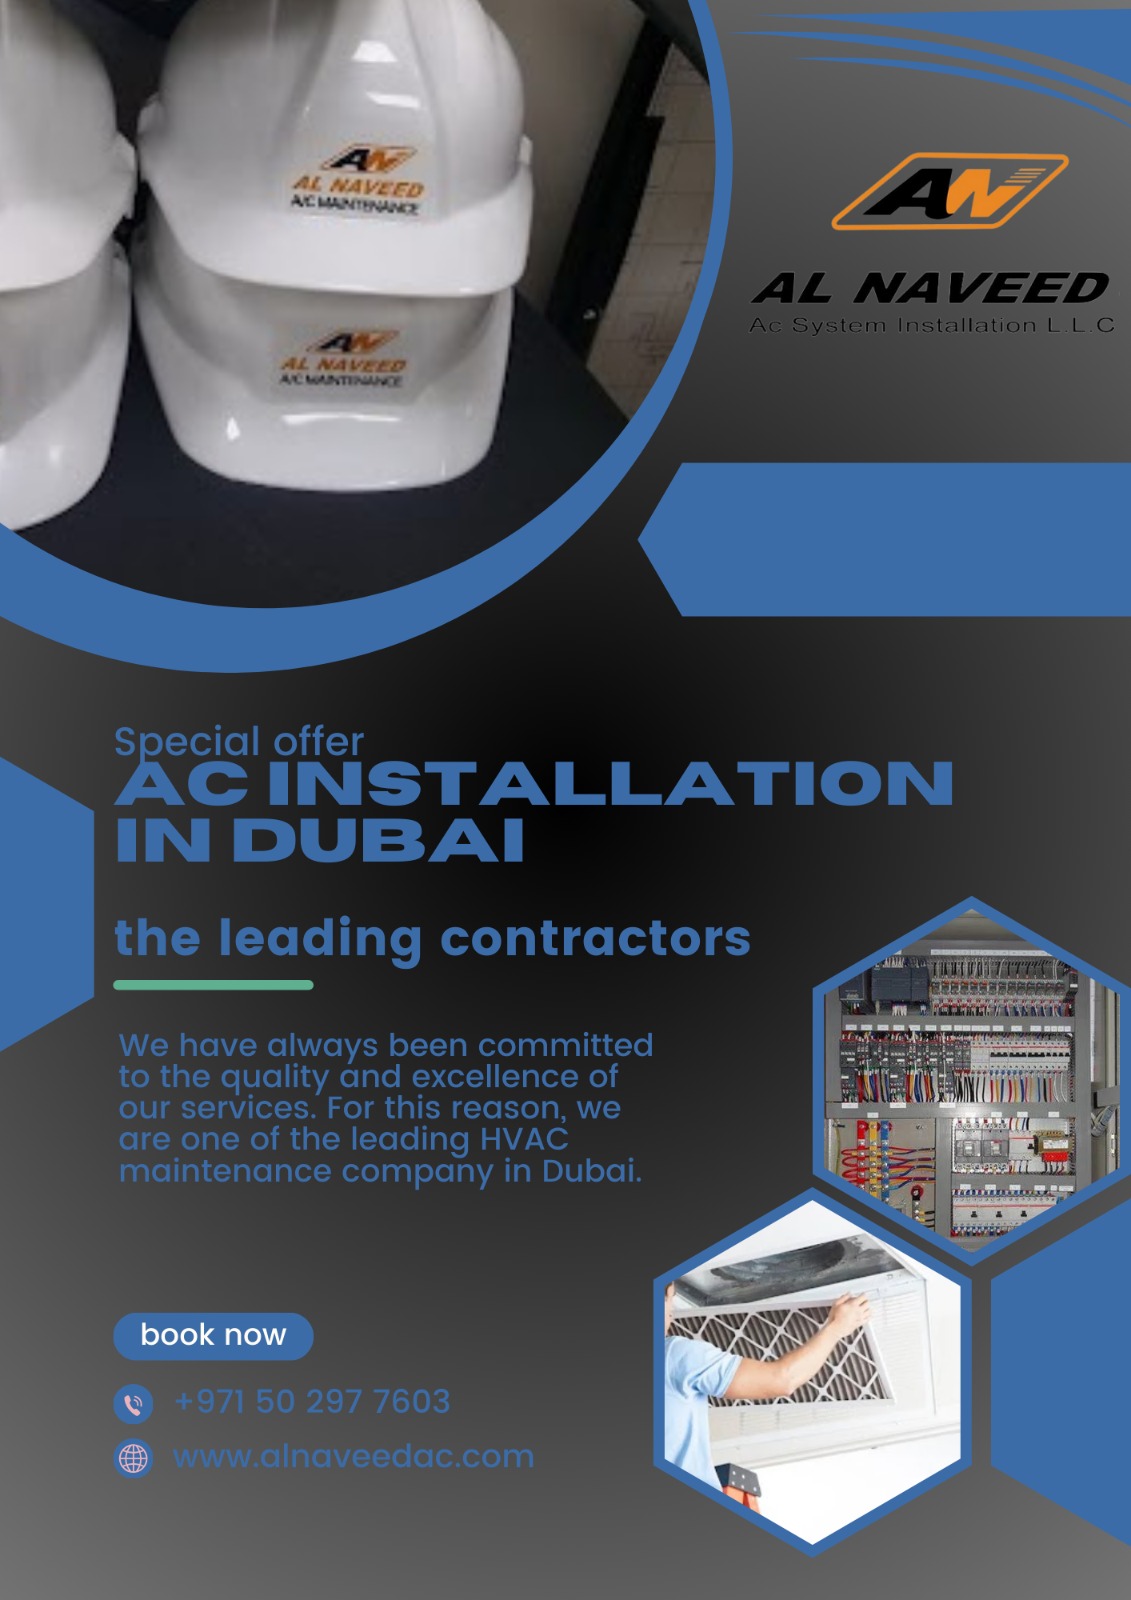 Al Naveed AC System Installation located at Deira